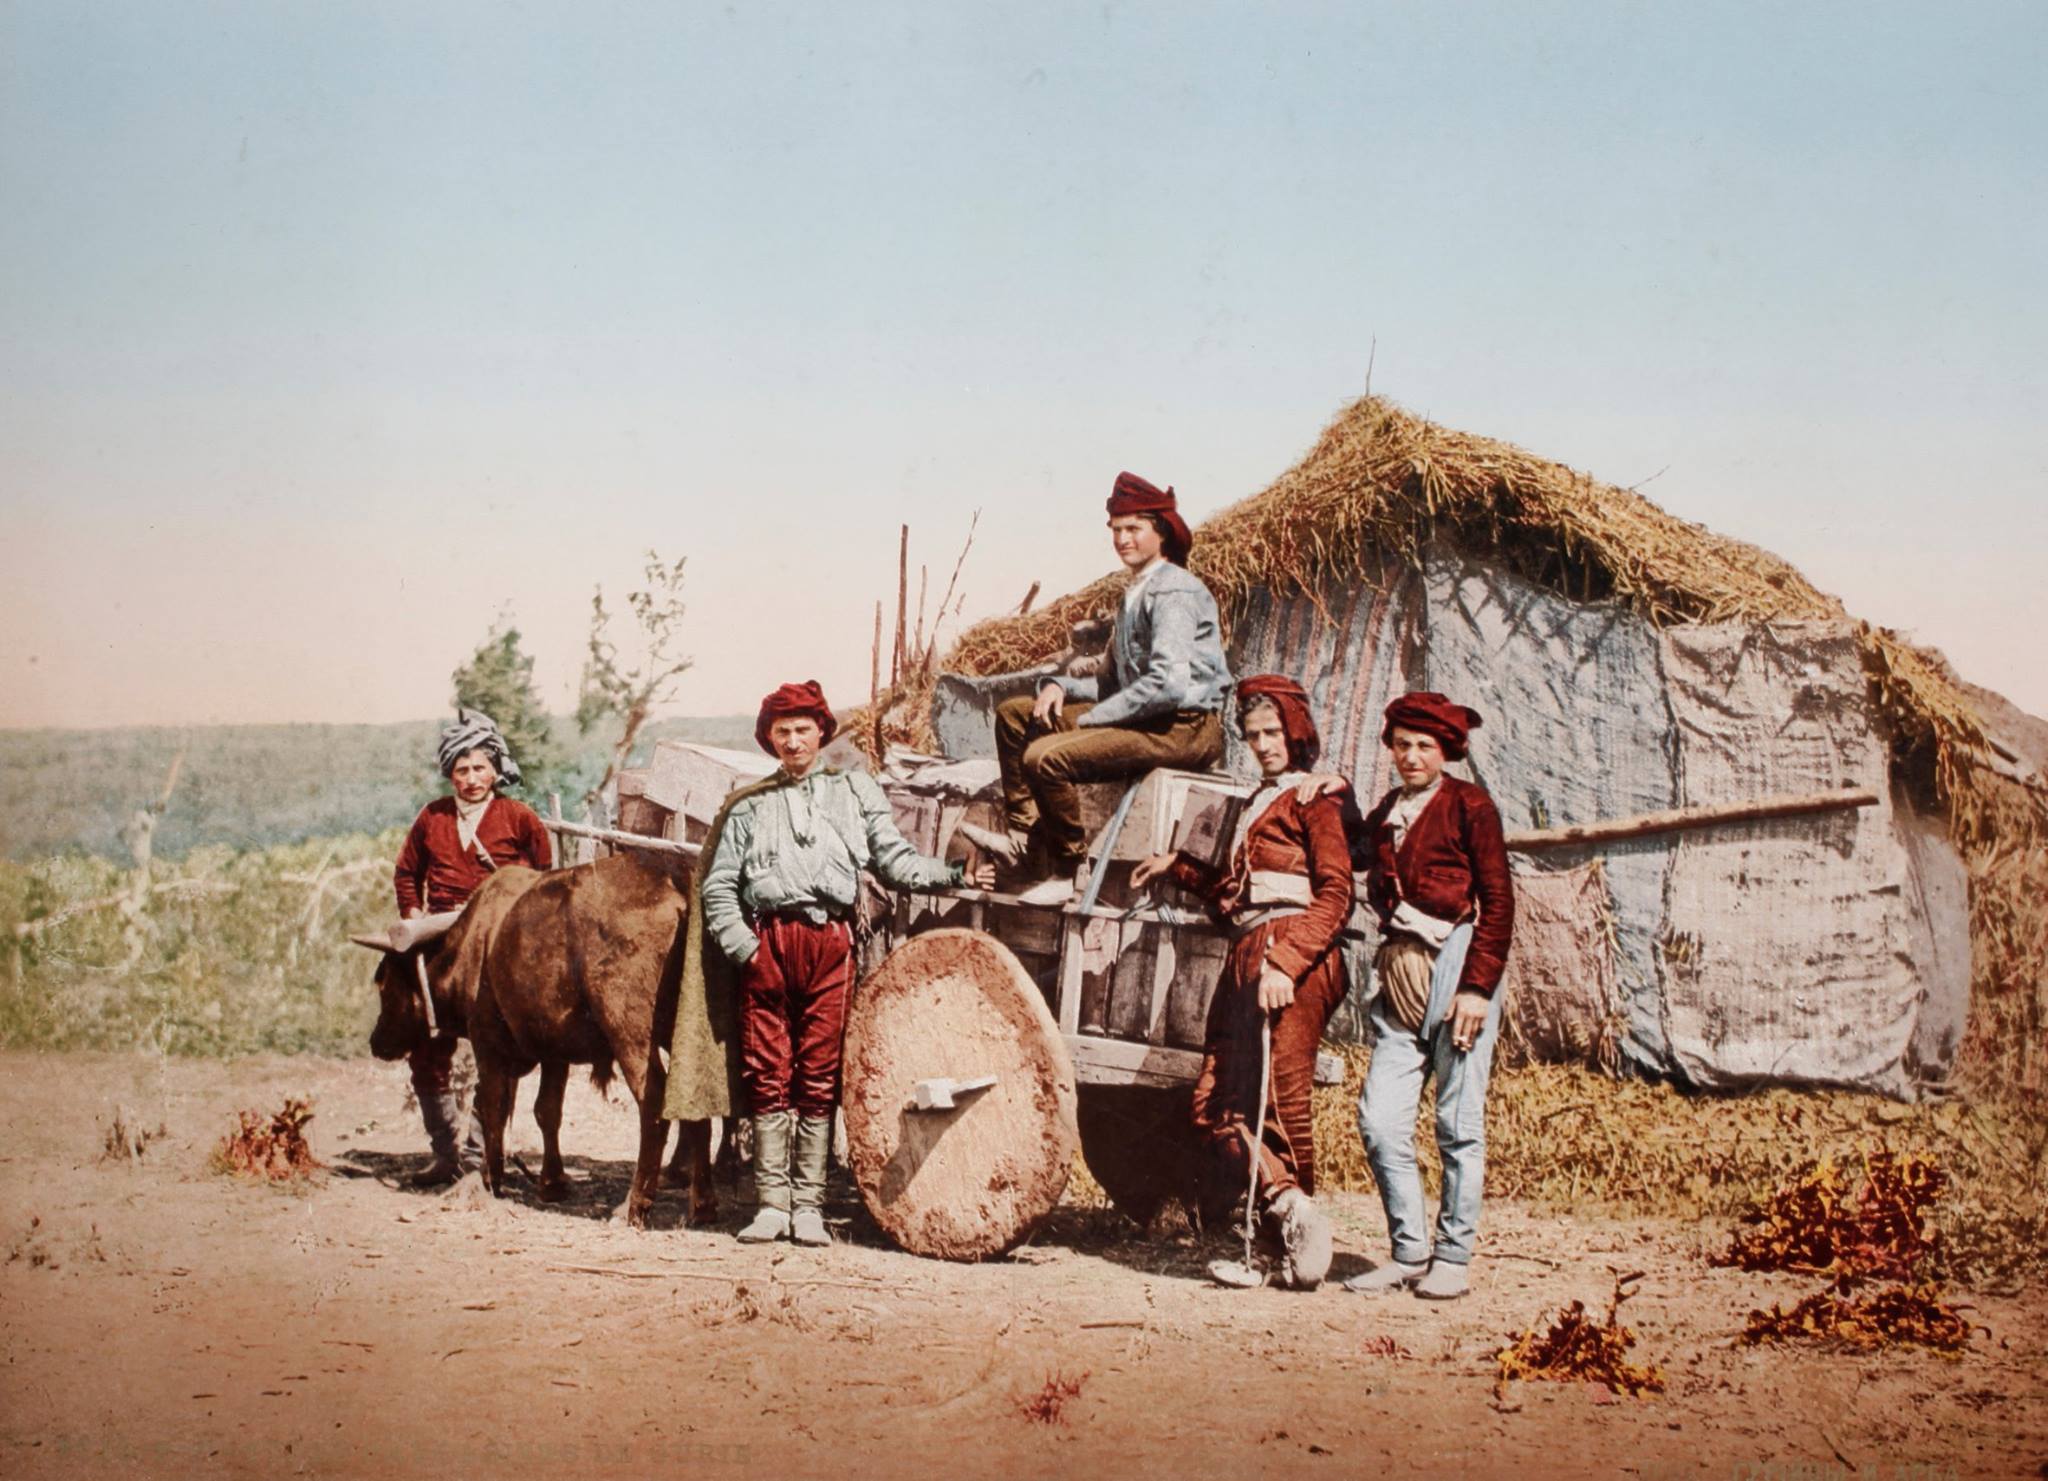 Georgian Farmers in Kobuleti, Georgia, 1877-78 at Russo-Ottoman War (Swiss Camera Museum)